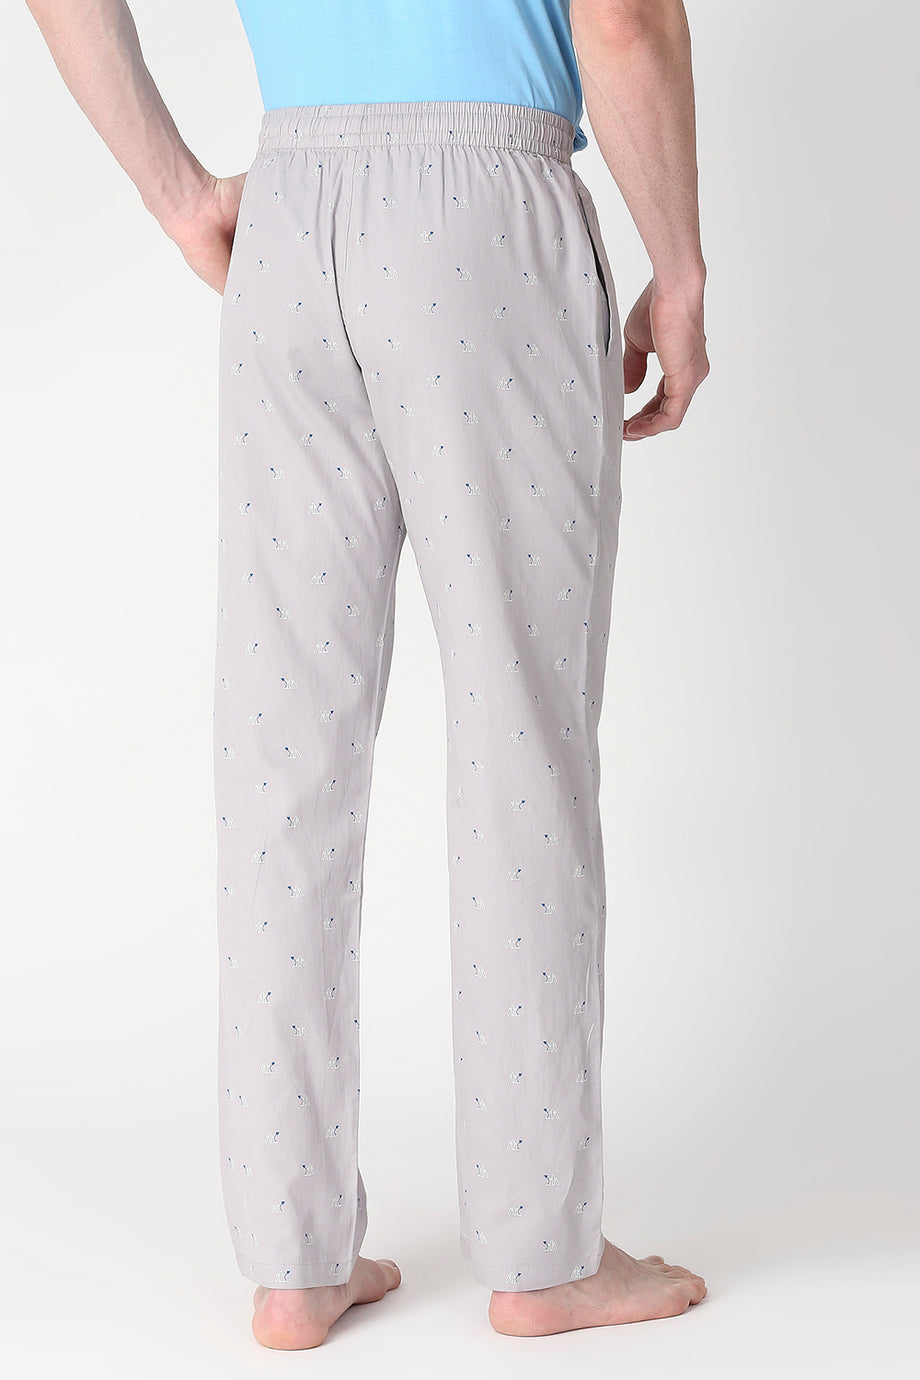 Polo Ralph Lauren Logo Cotton Pyjama Pants in Blue for Men